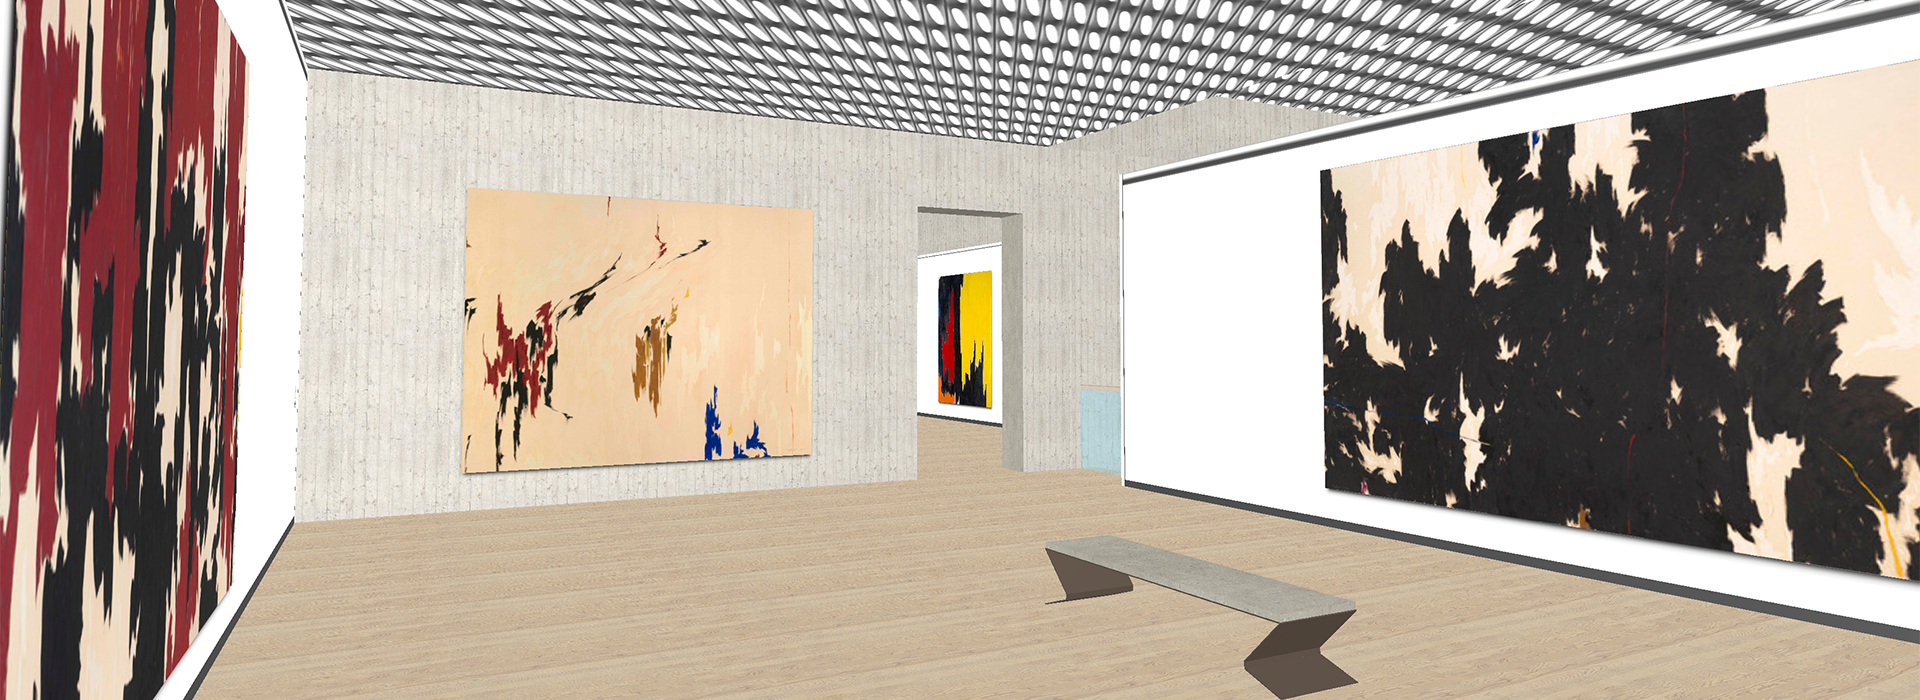 Clyfford Still Museum gallery in a virtual layout